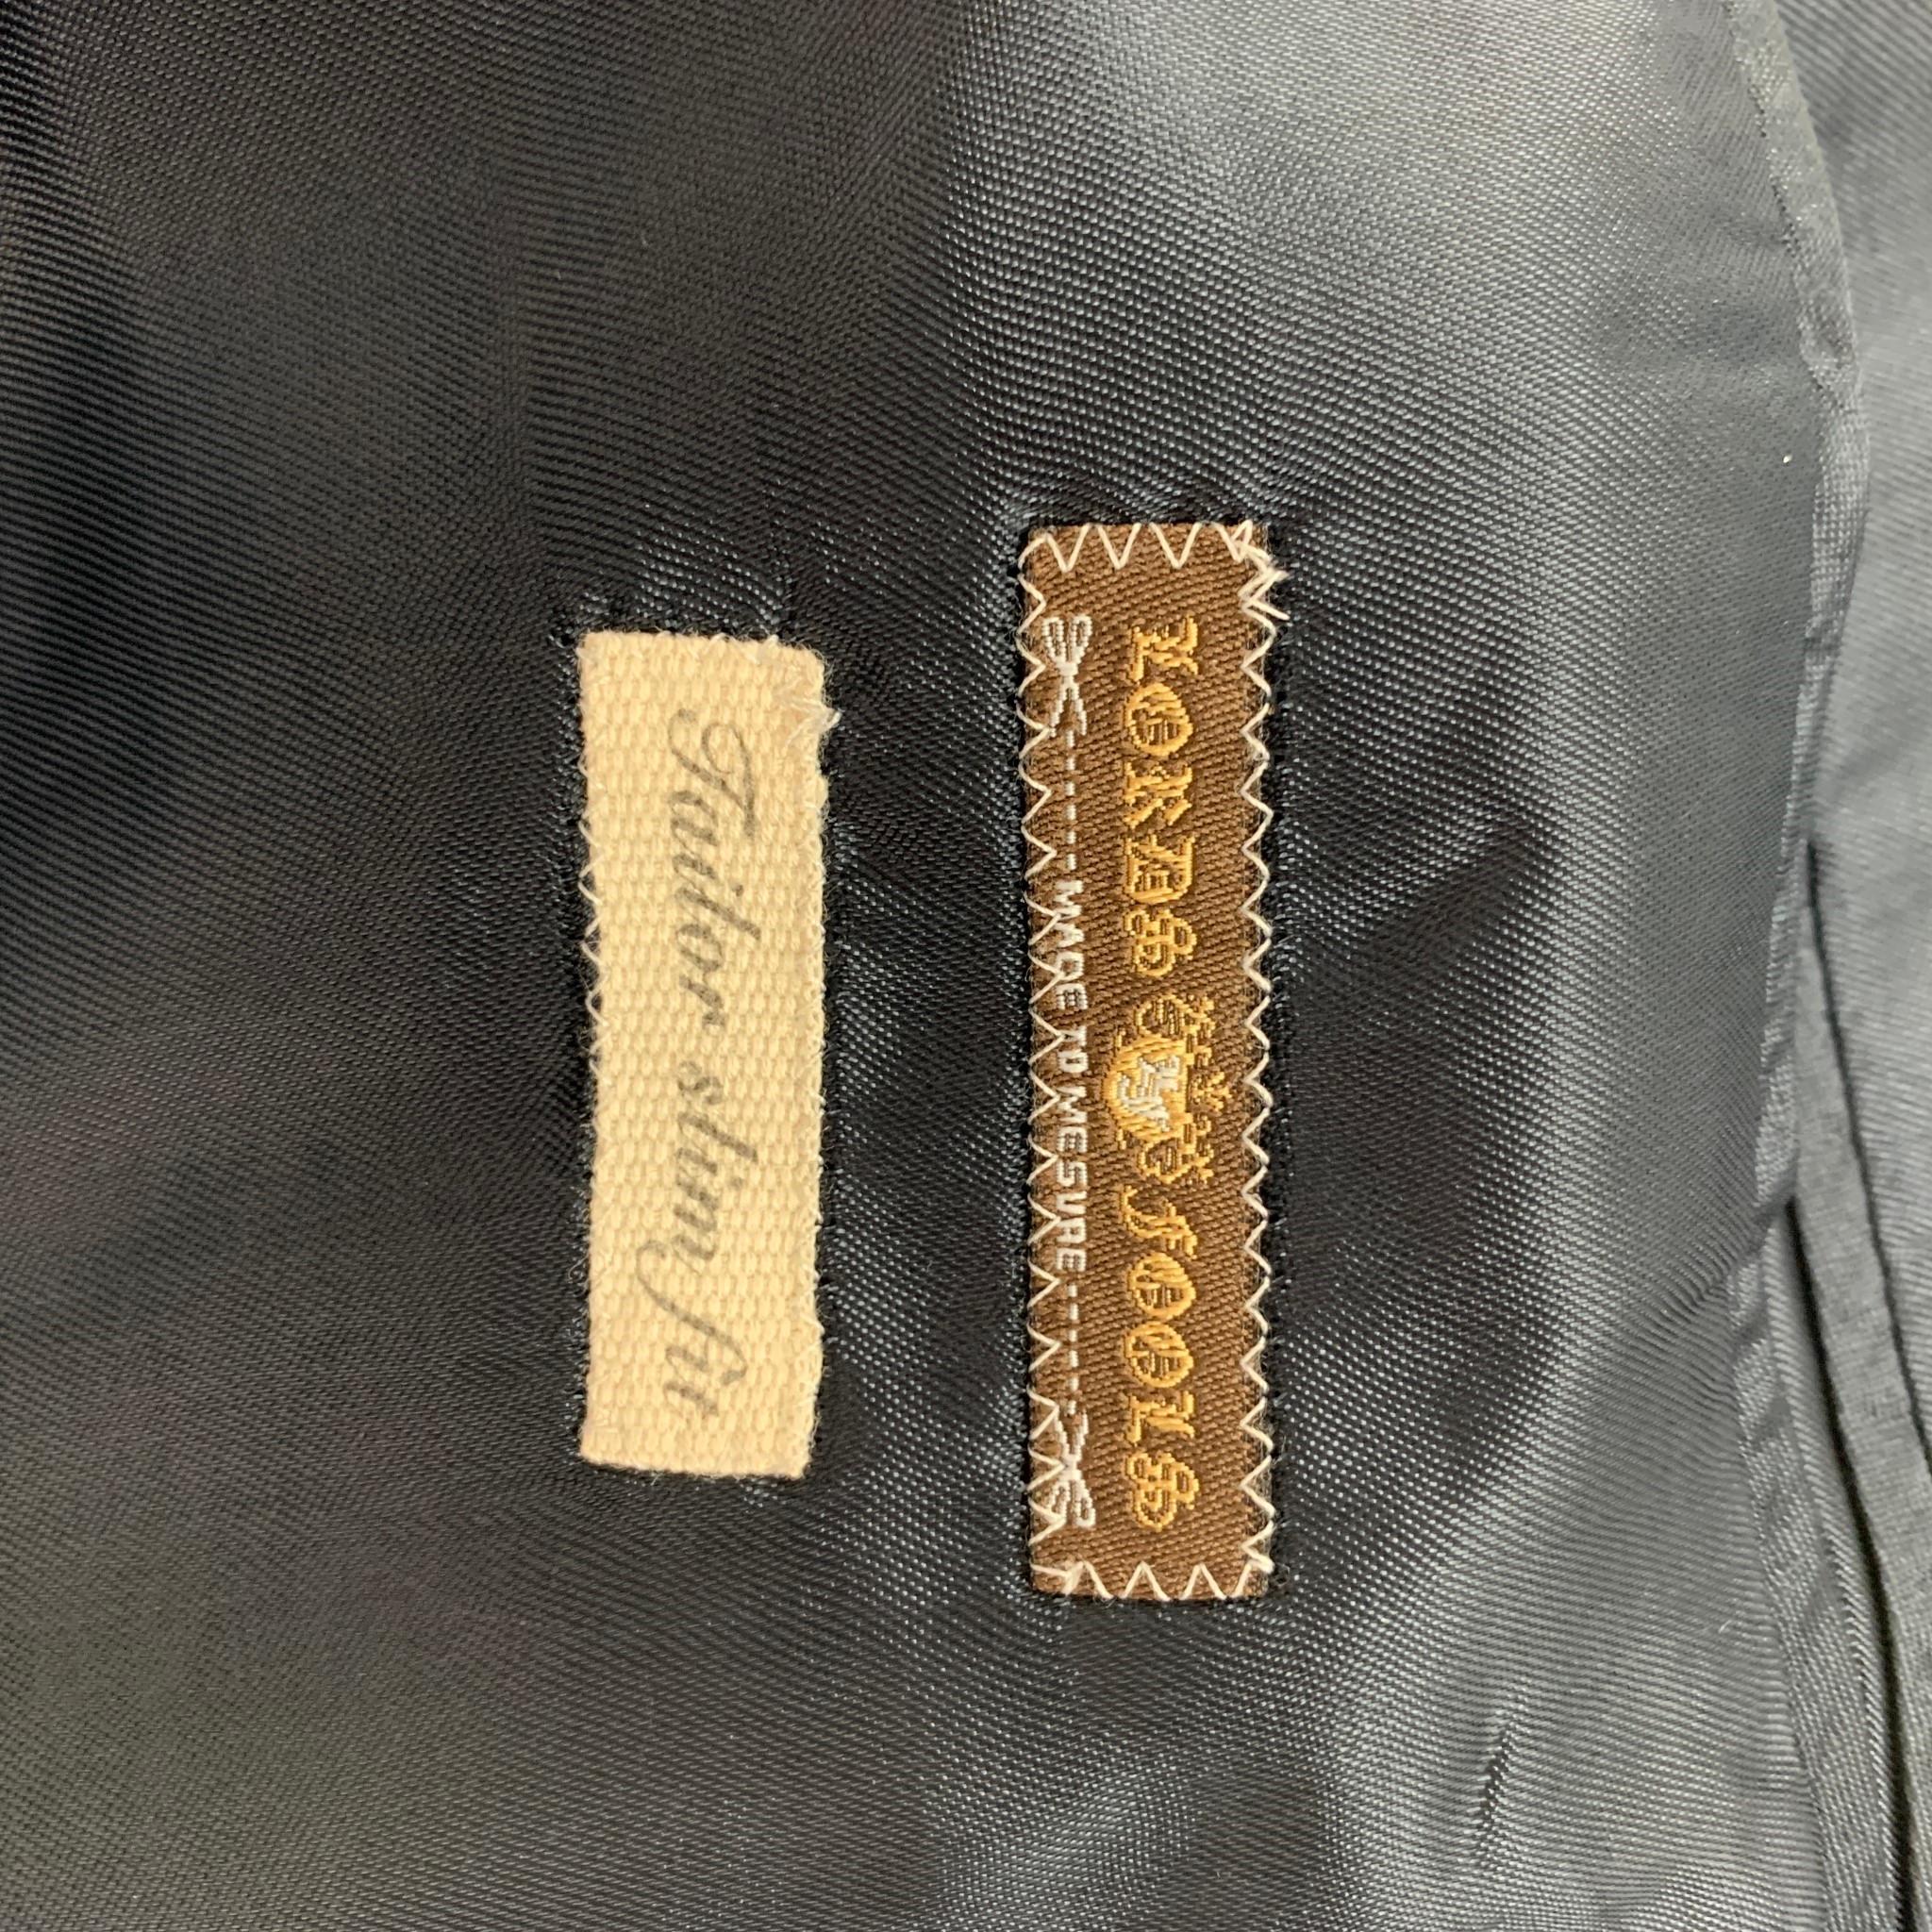 LORDS & FOOLS Size 36 Navy Black Textured Wool Blend Peak Lapel Tuxedo Suit 5